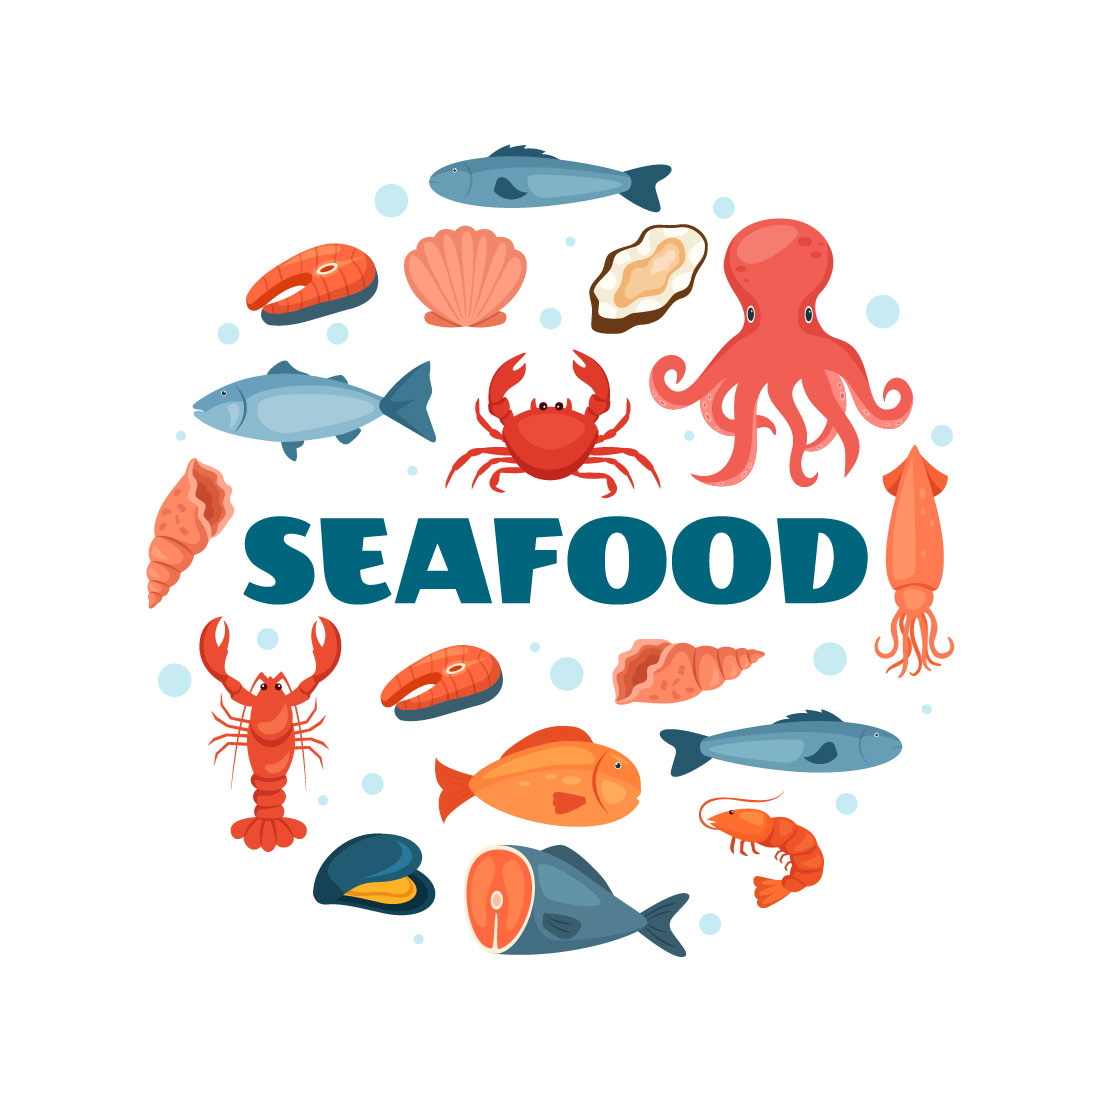 14 Seafood Market Illustration preview image.